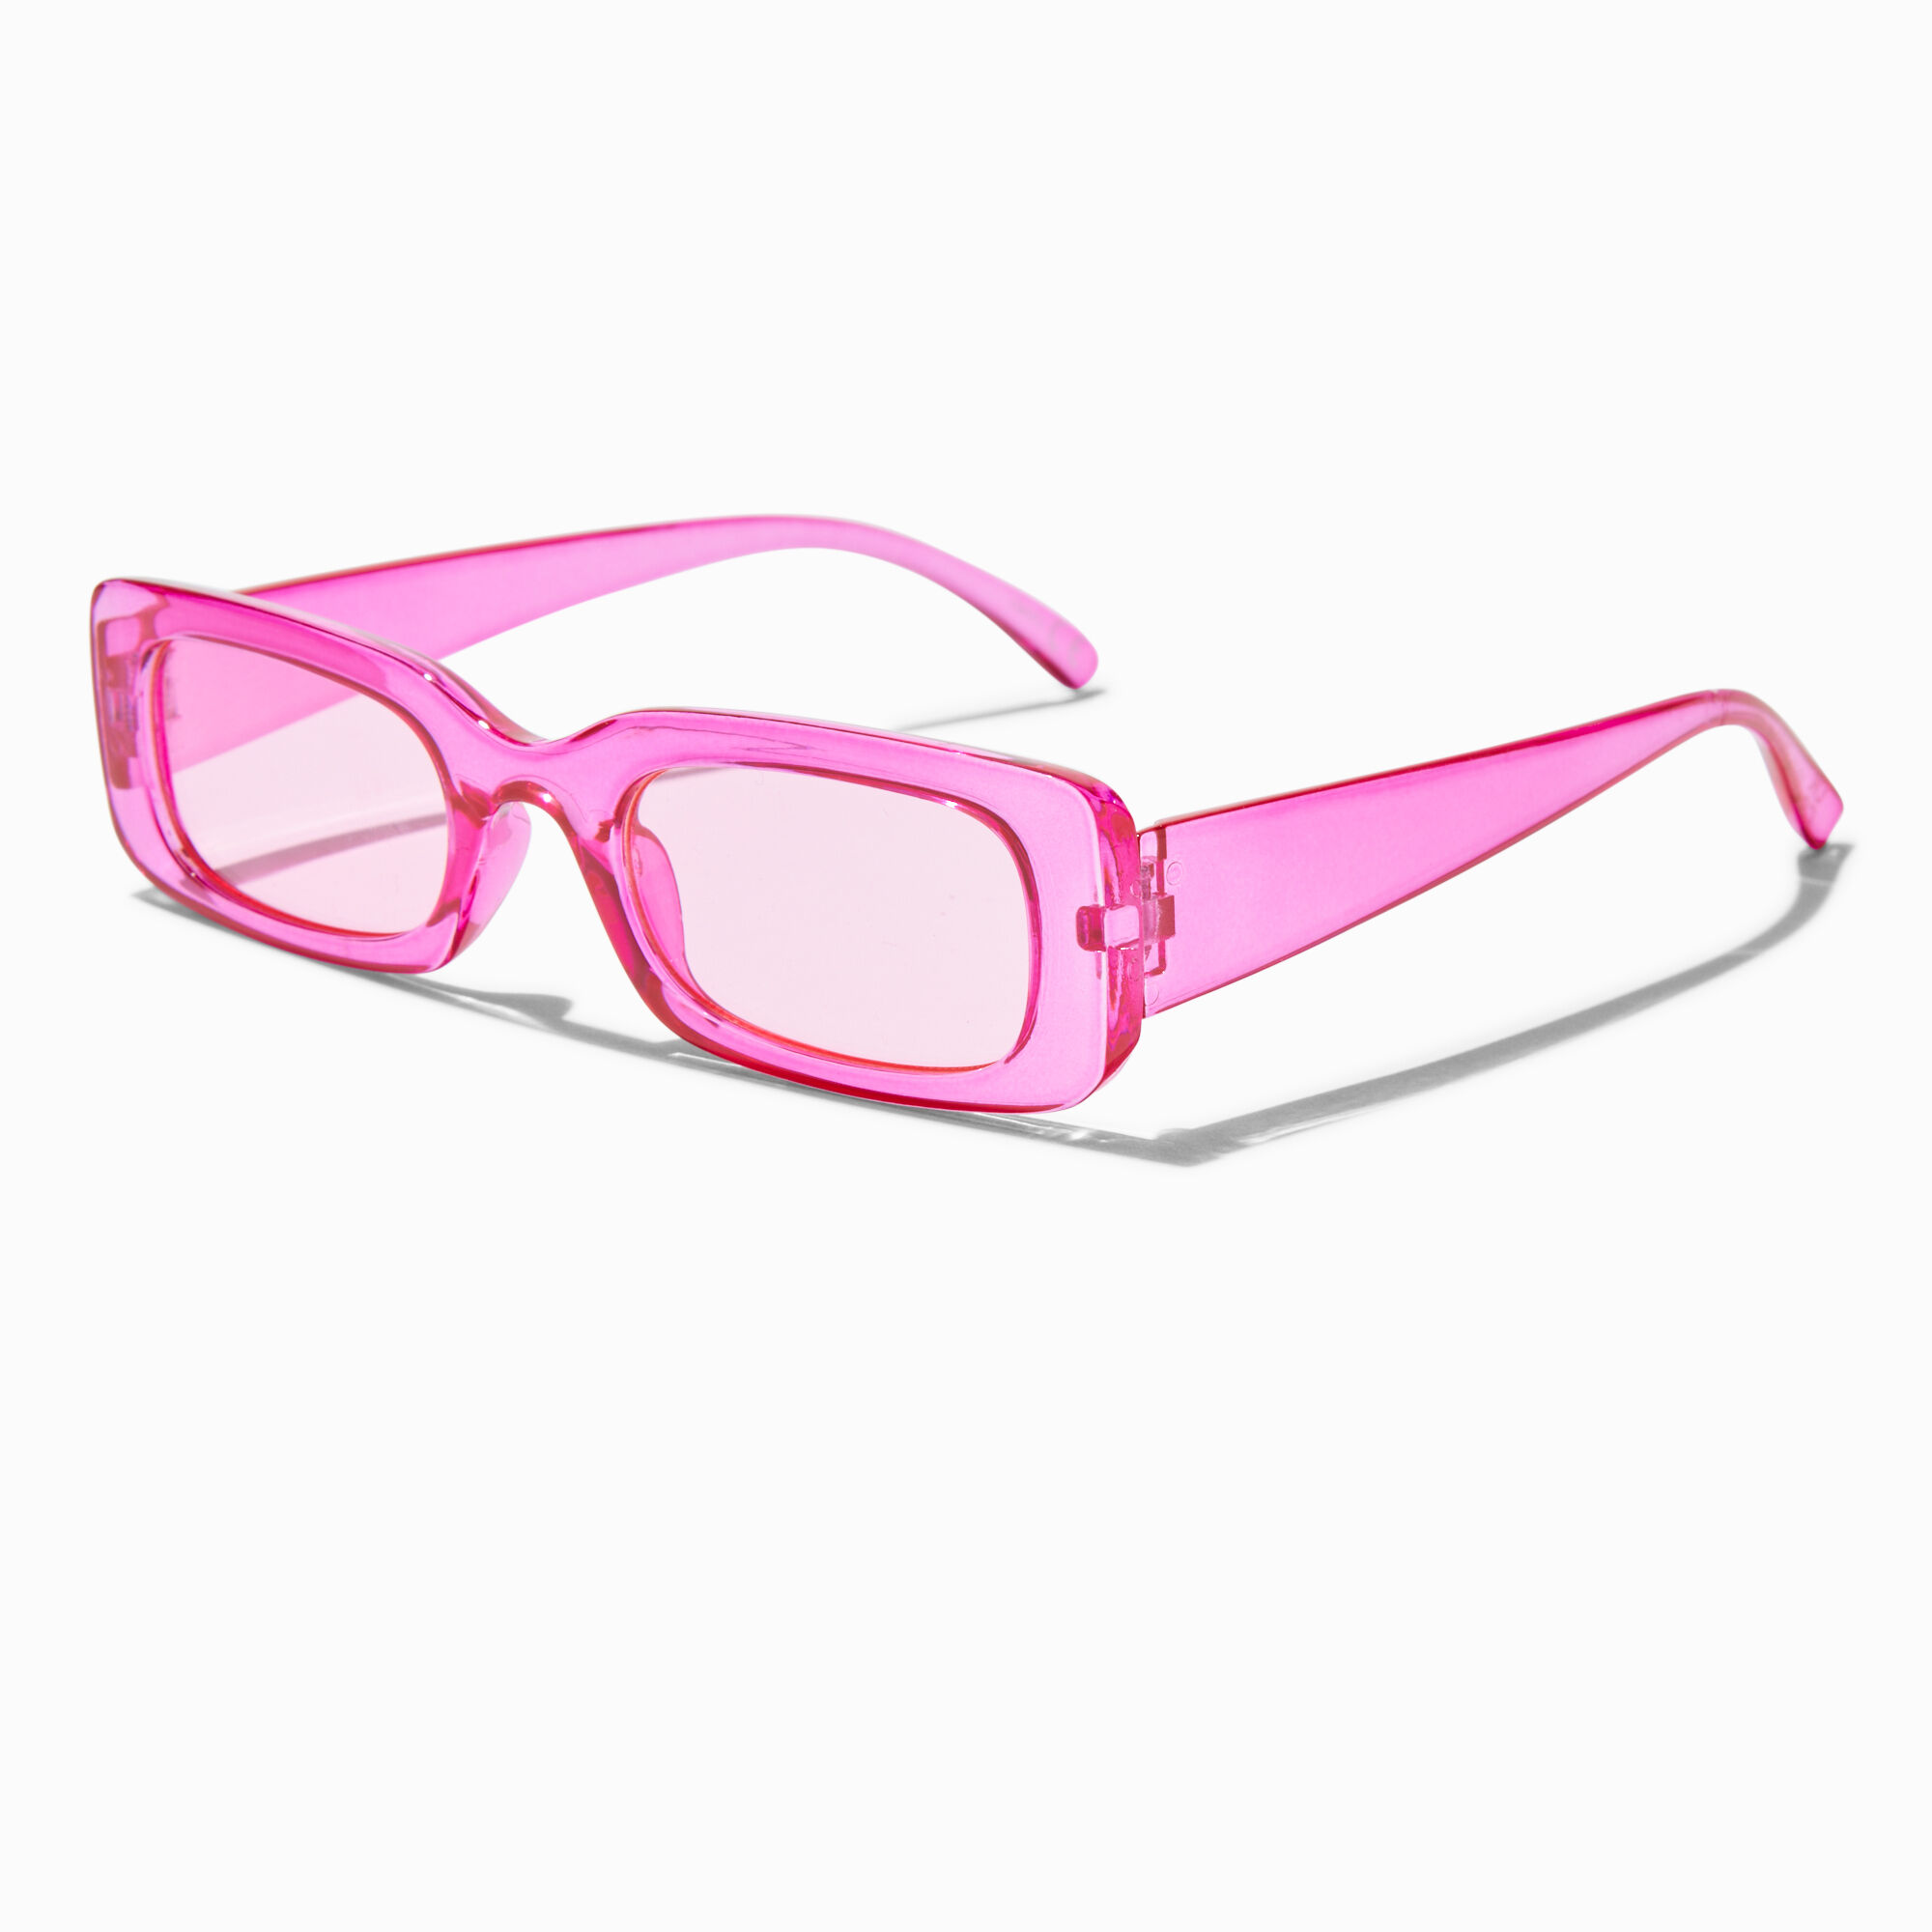 View Claires Translucent Rectangular Frame Sunglasses Fuchsia information